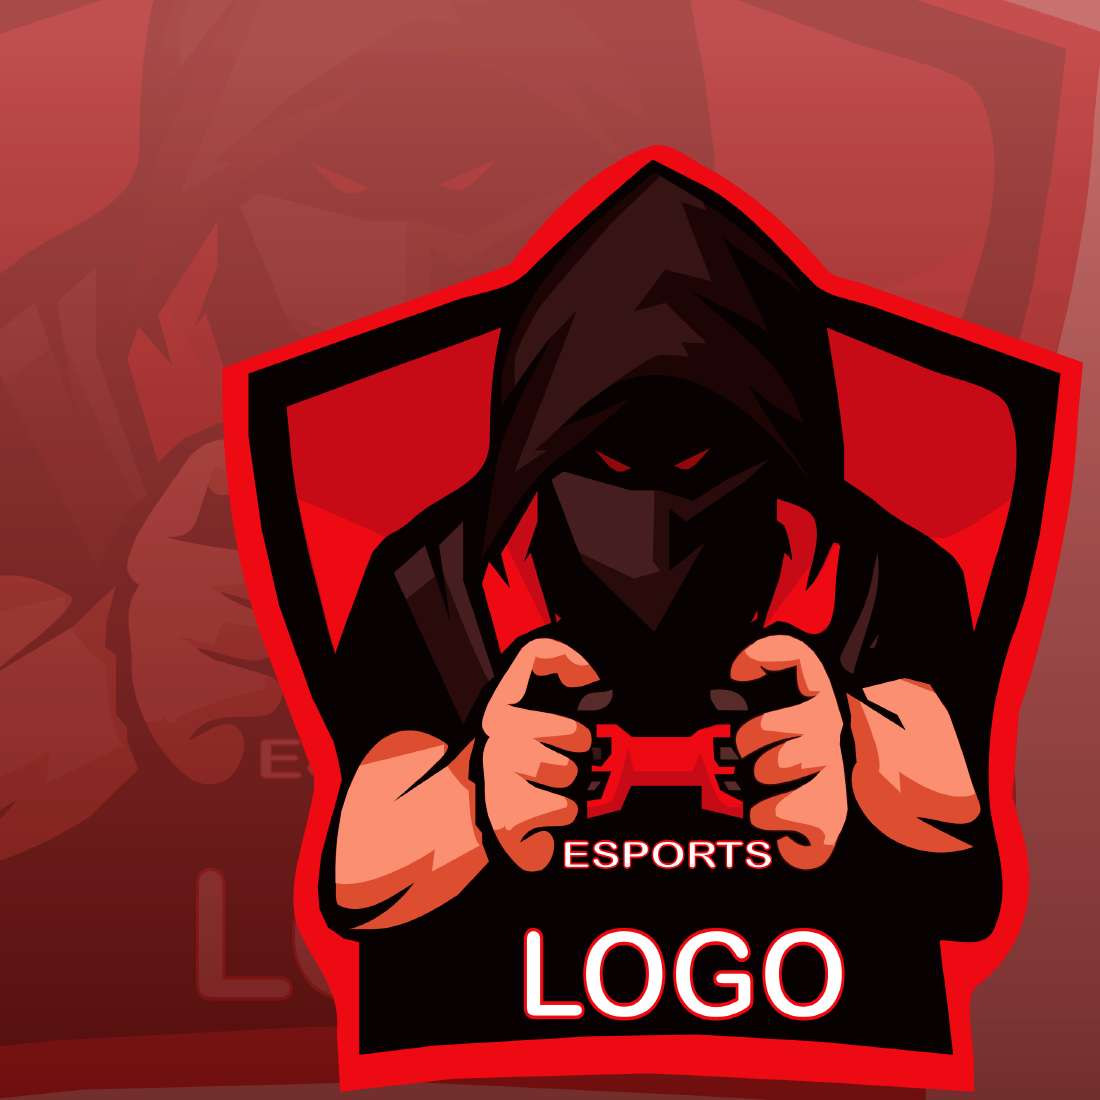 Esports Game Logo preview image.